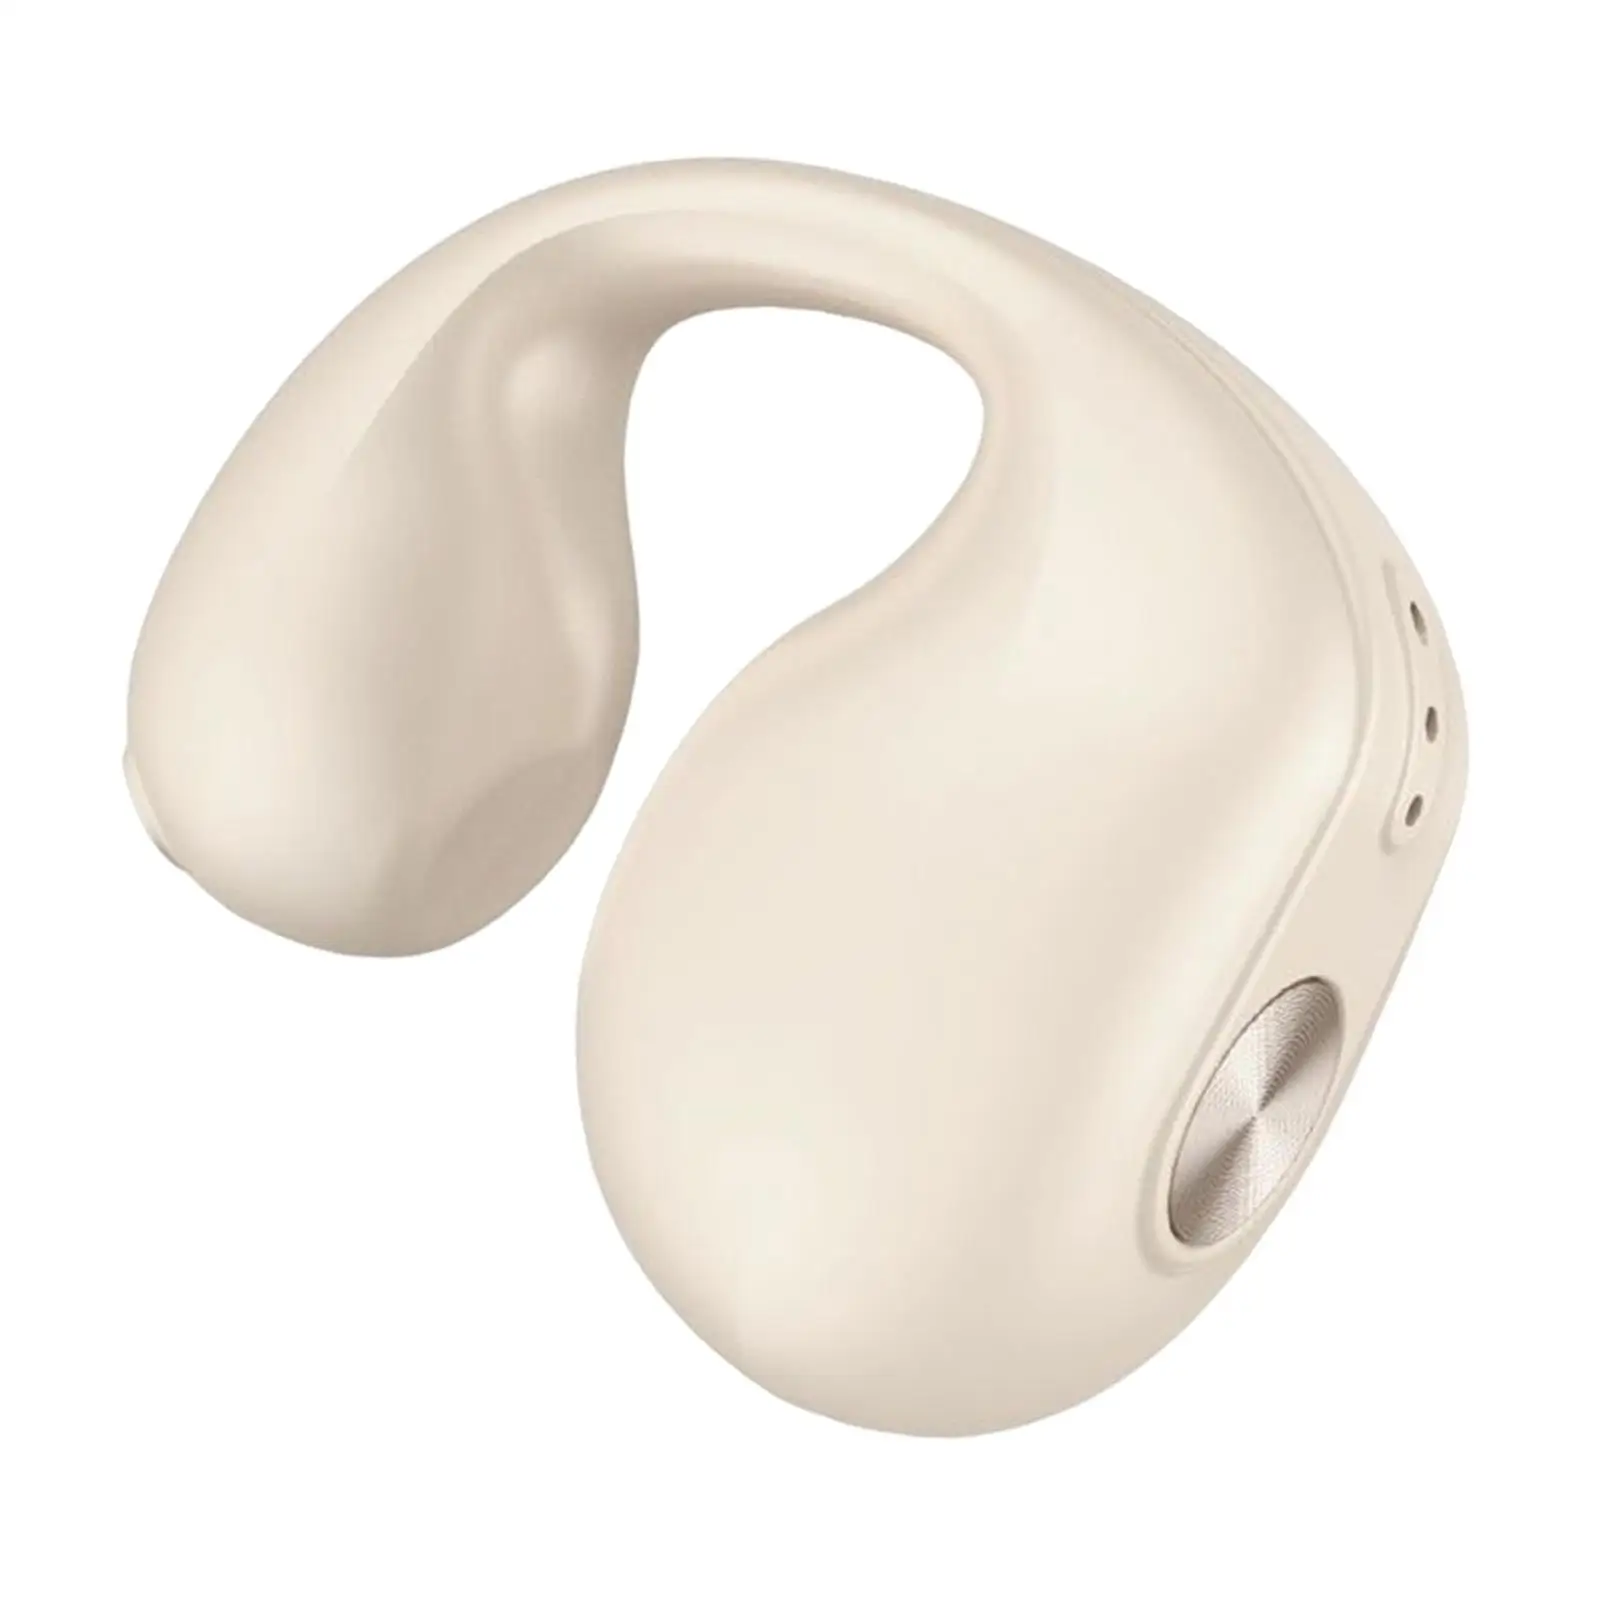 Single Ear Clip Wireless Headset HiFi Sound Earphones for Driving Workout Sports